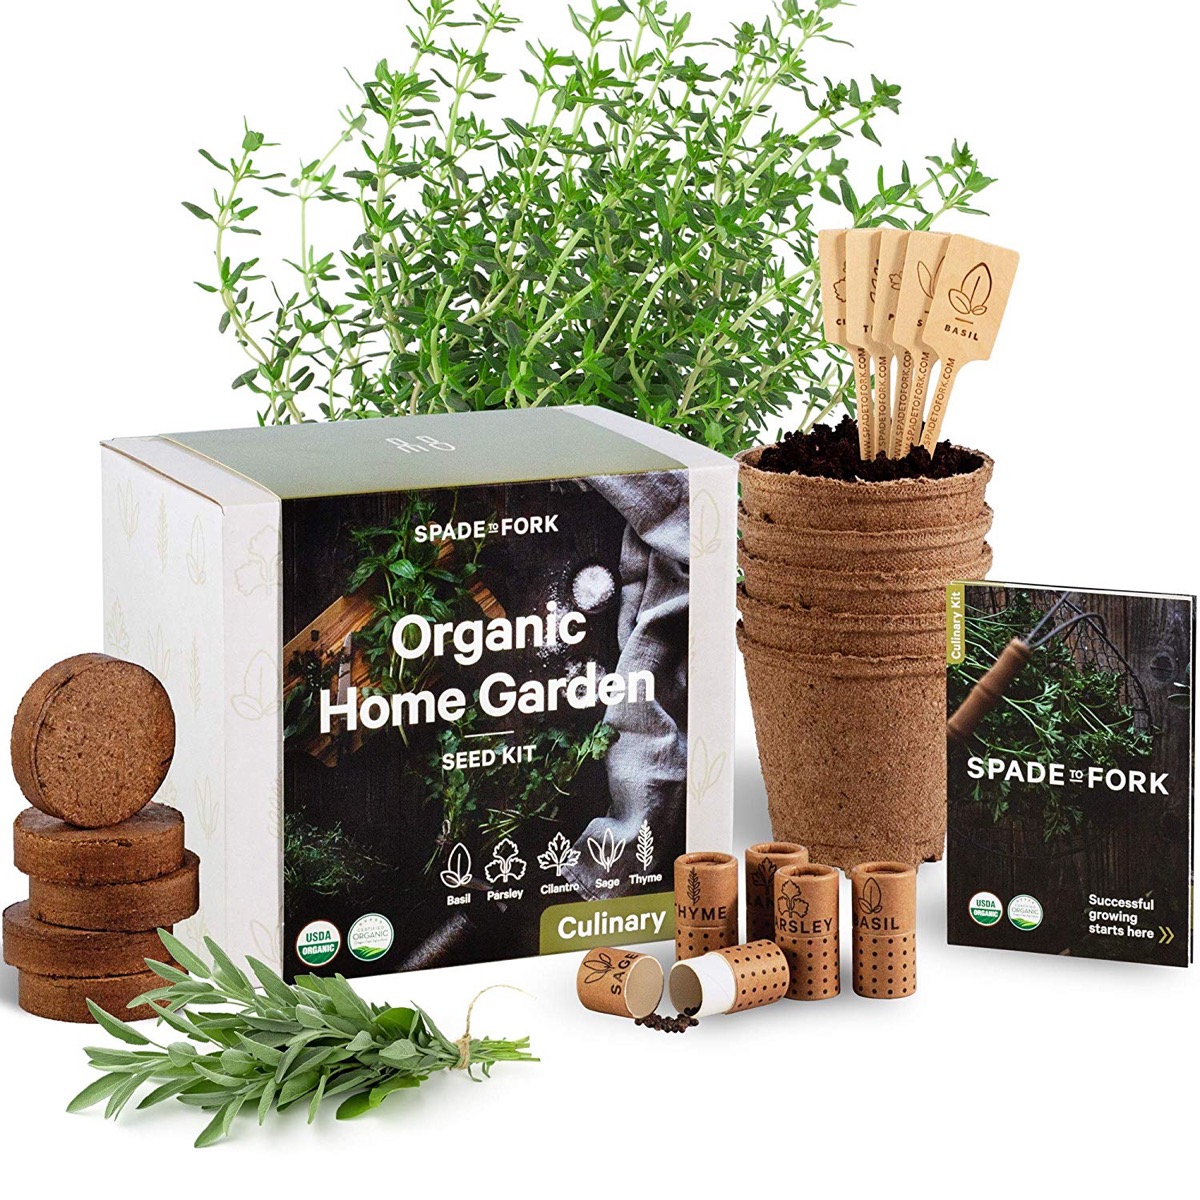 herbs, brown cardboard pots, and organic gardening kit